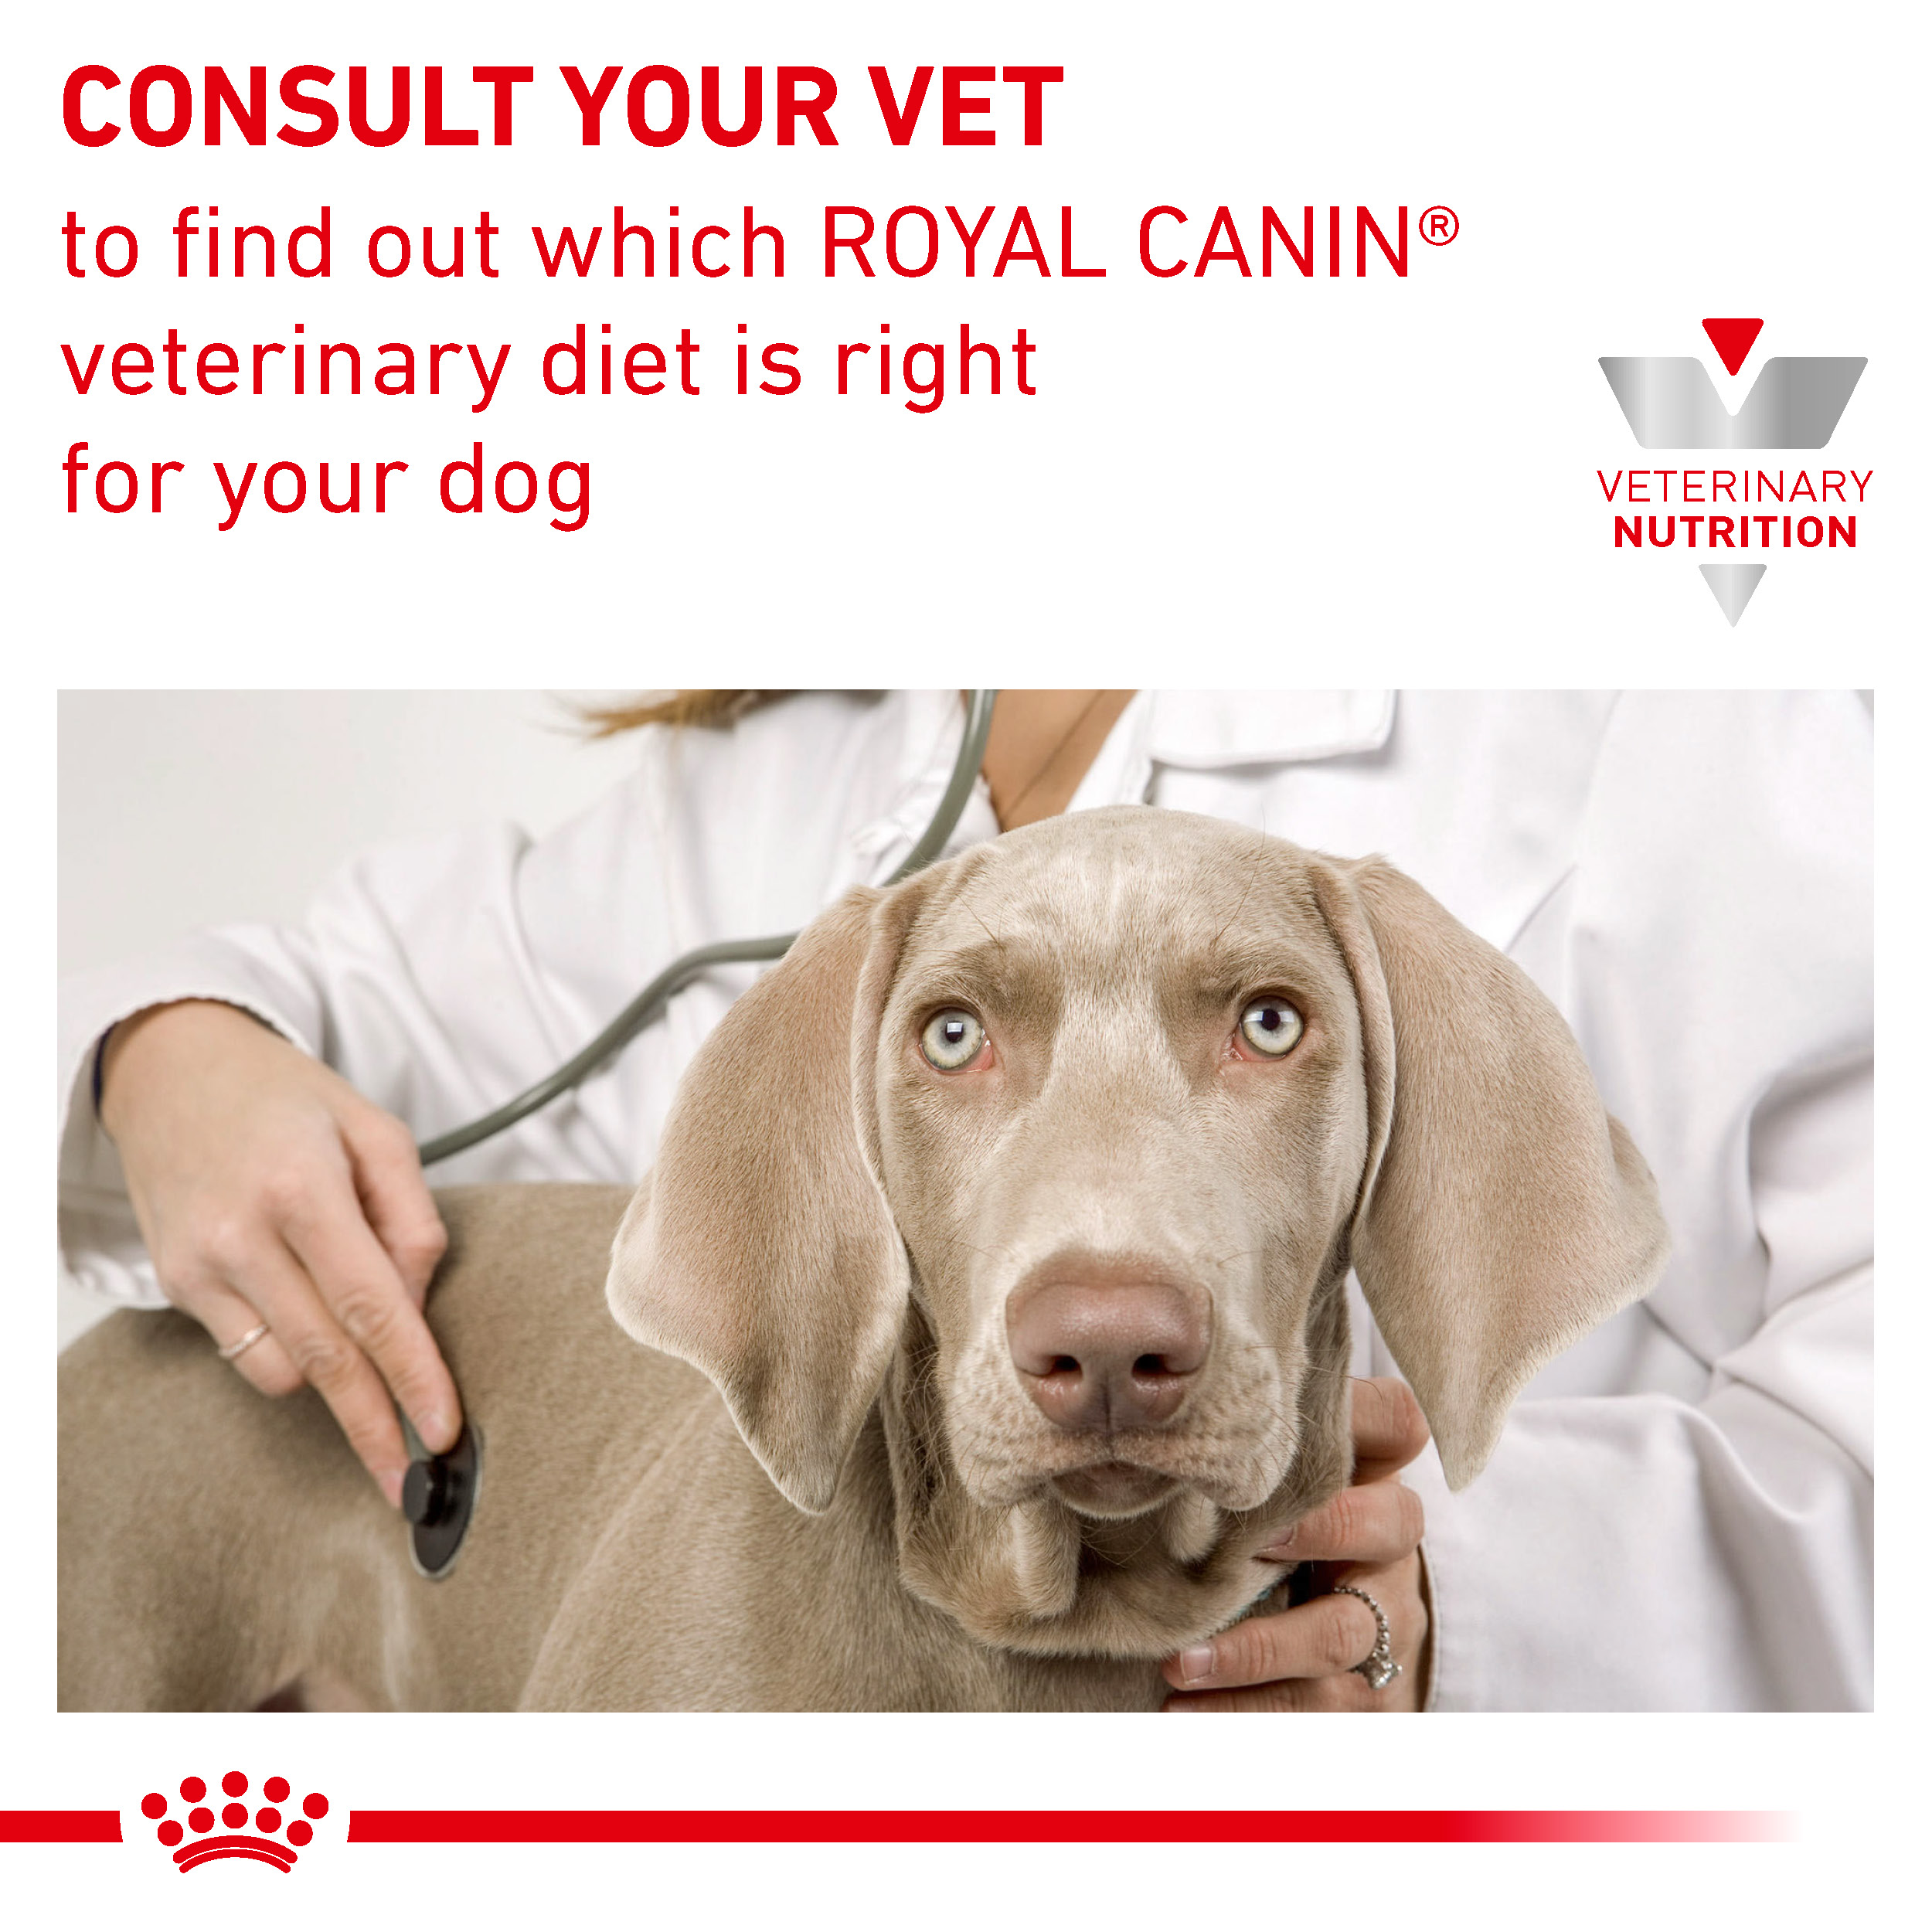 ROYAL CANIN® VETERINARY HEALTH NUTRITION CARDIAC Dry Pet Food for Dogs